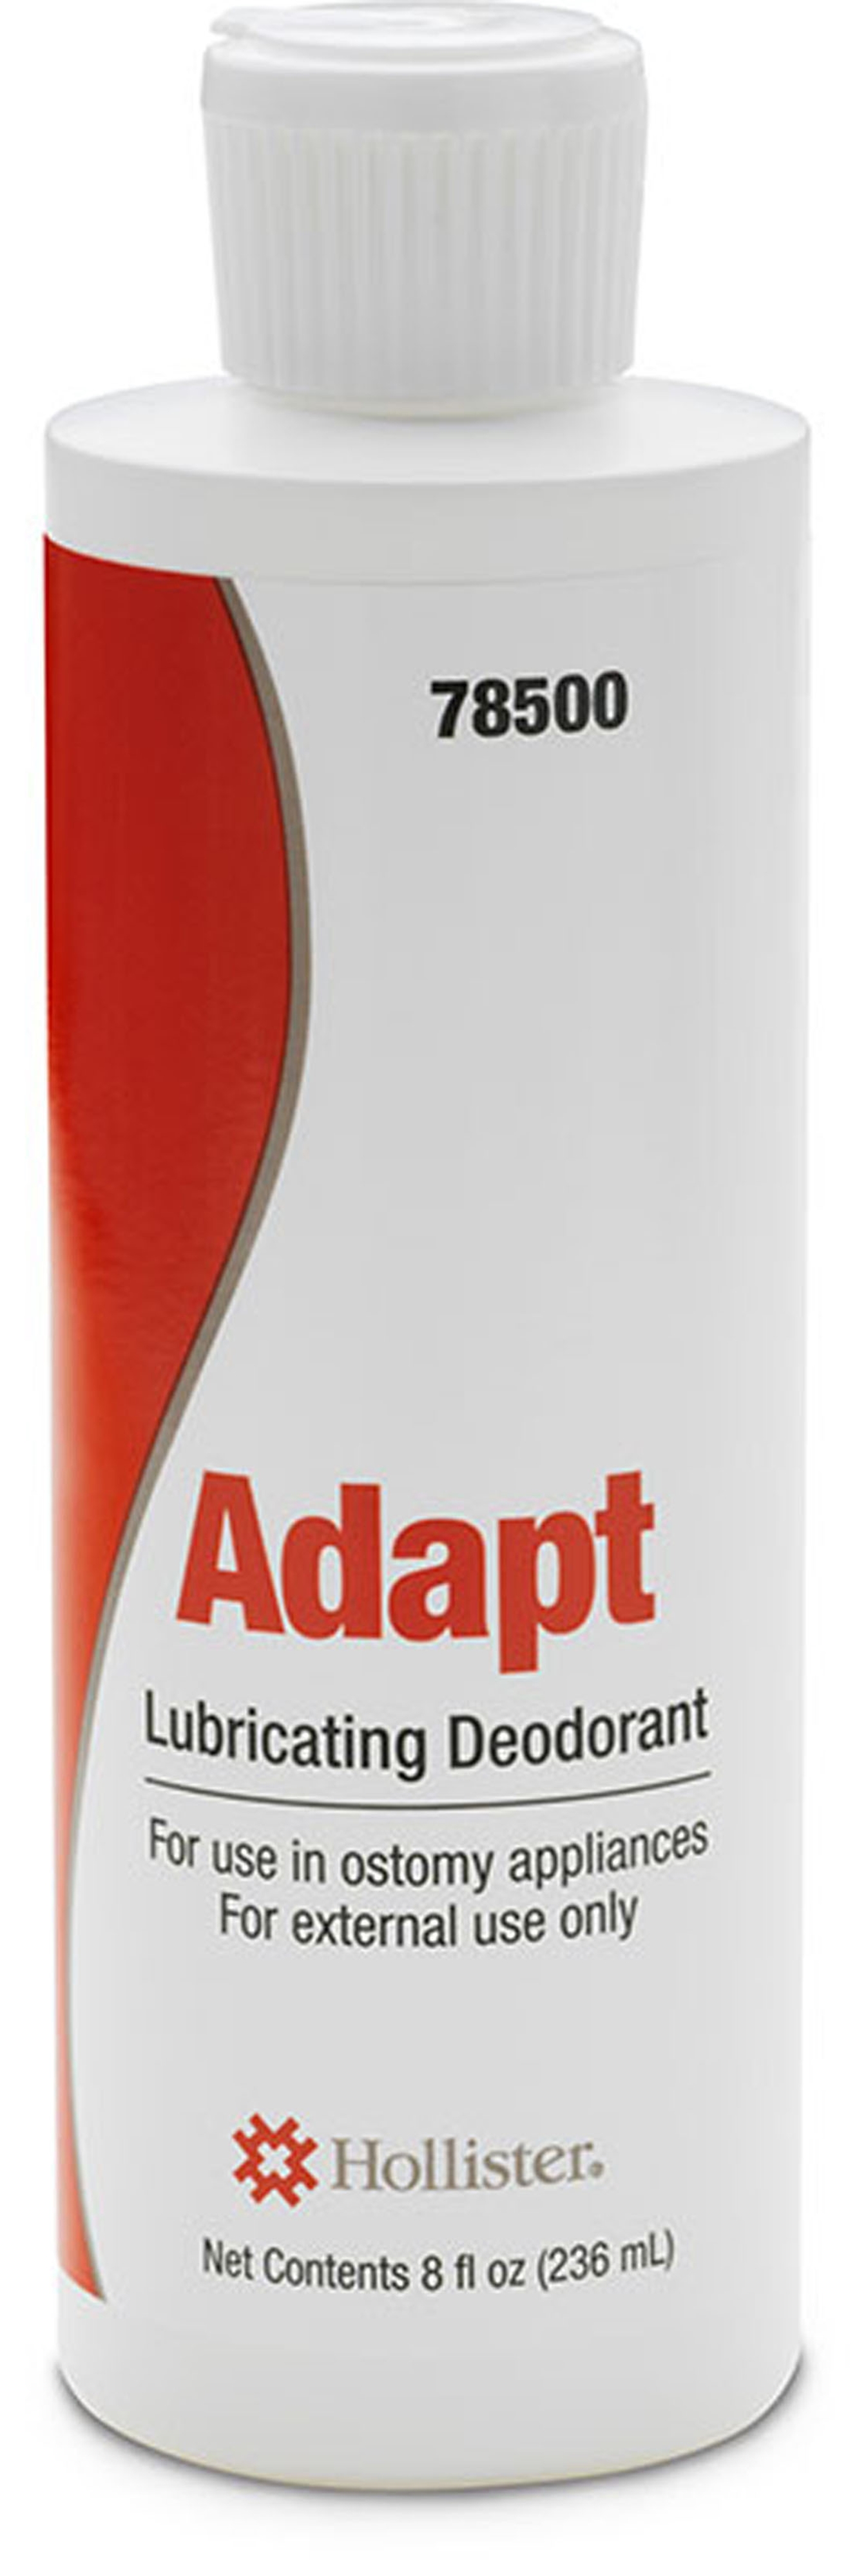 Hollister Adapt smørende deodorant, 78500, 236 ml, 1 stk.